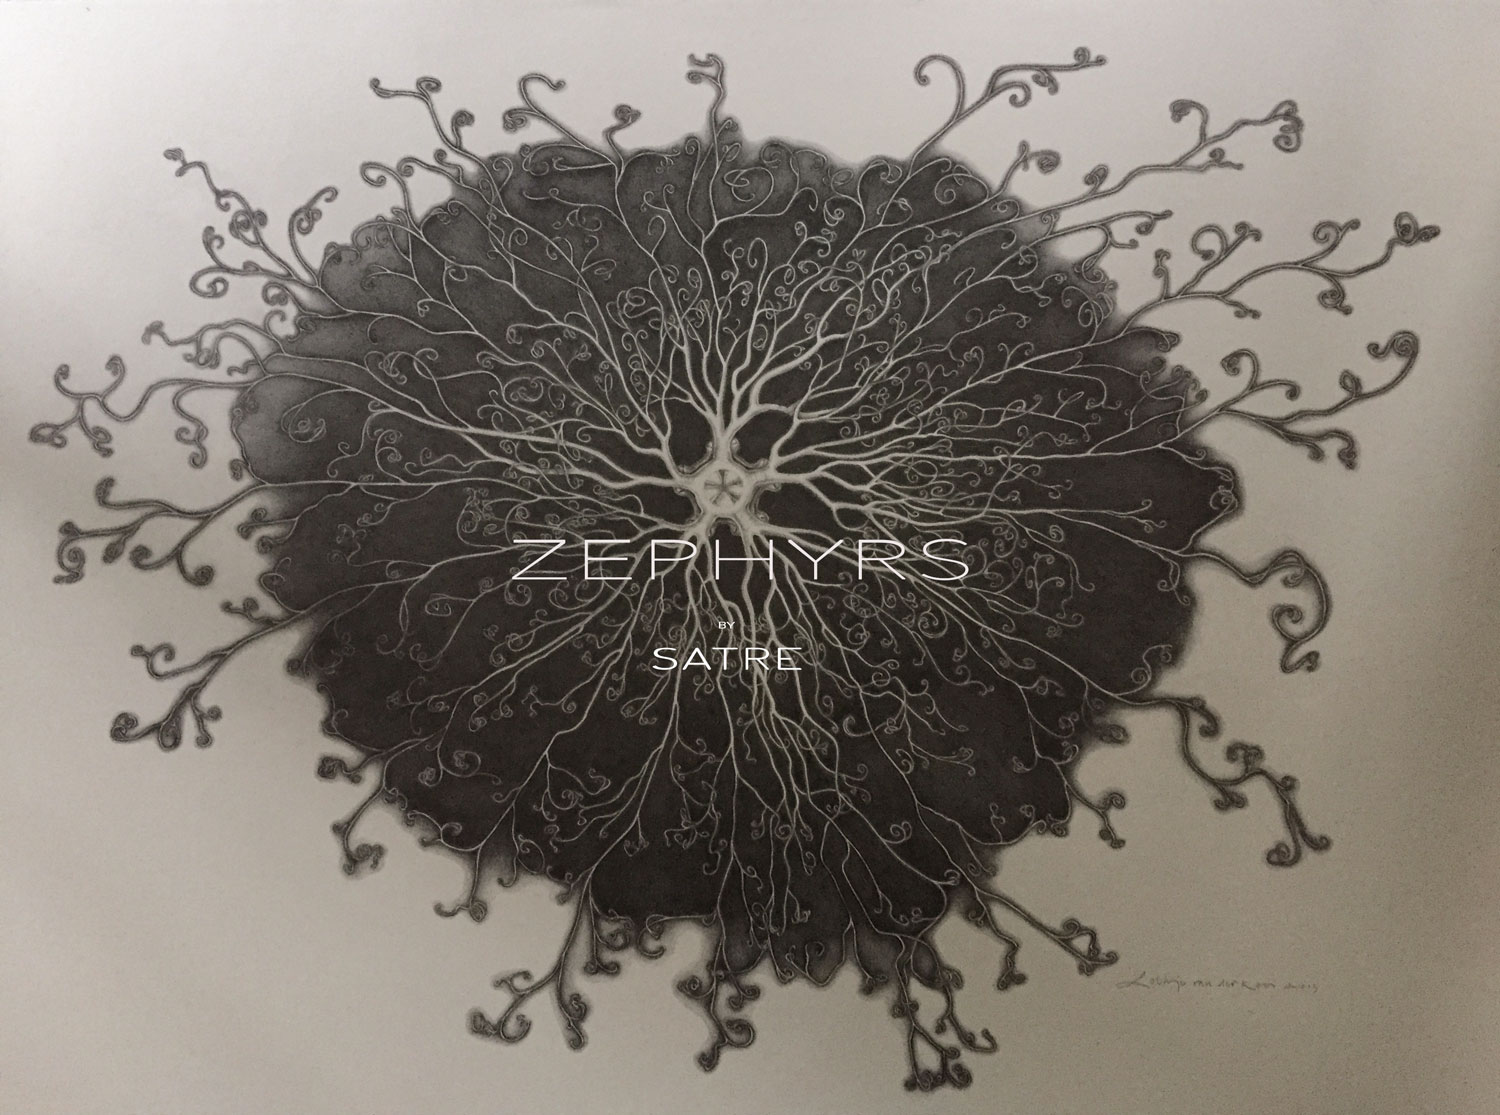 Zephyrs-Front-1500-geir-satre.jpg